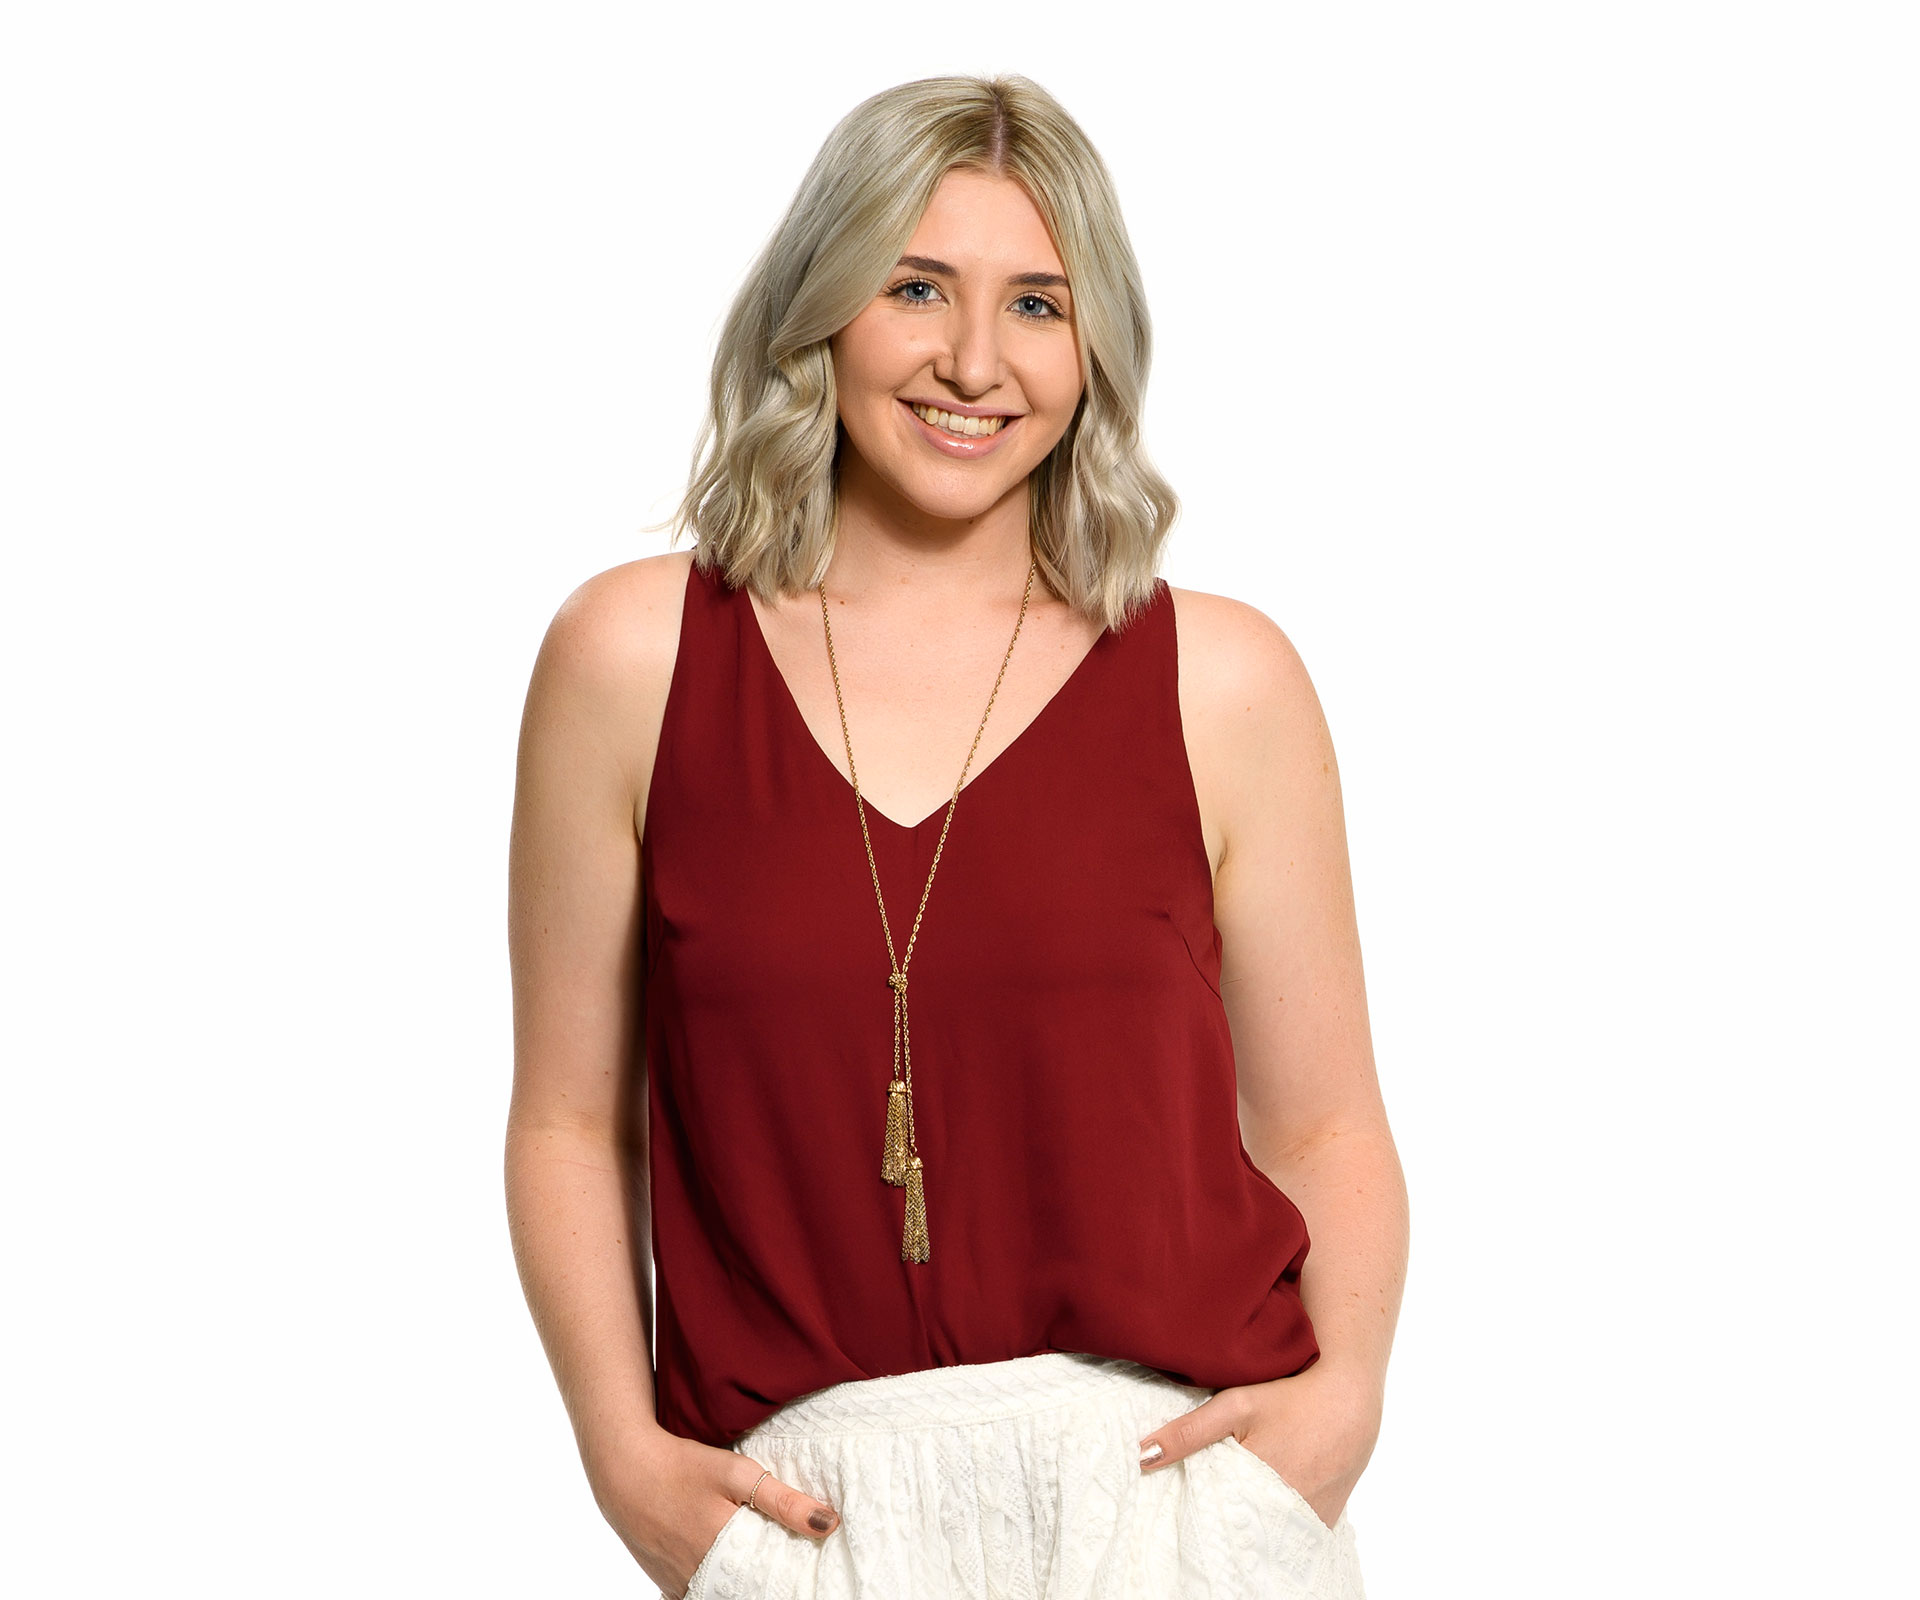 The Voice contestant Sarah Stone